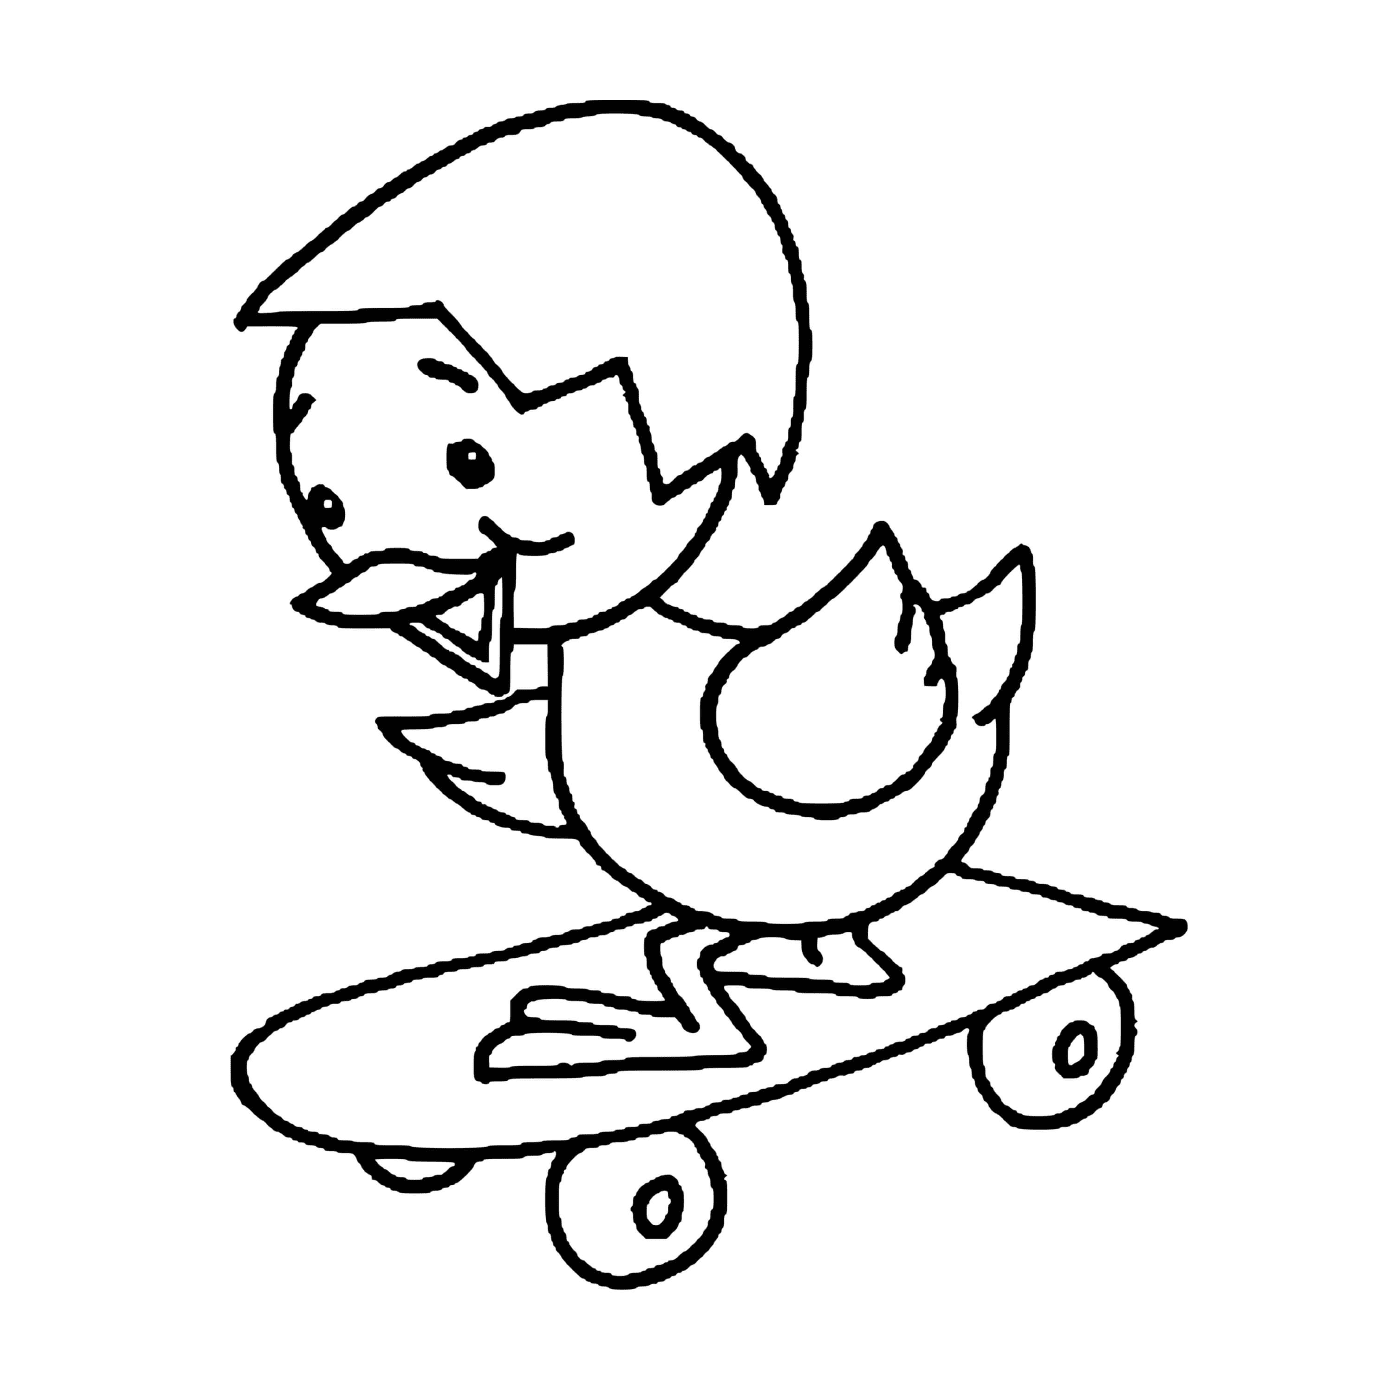  Skating powder flying board 